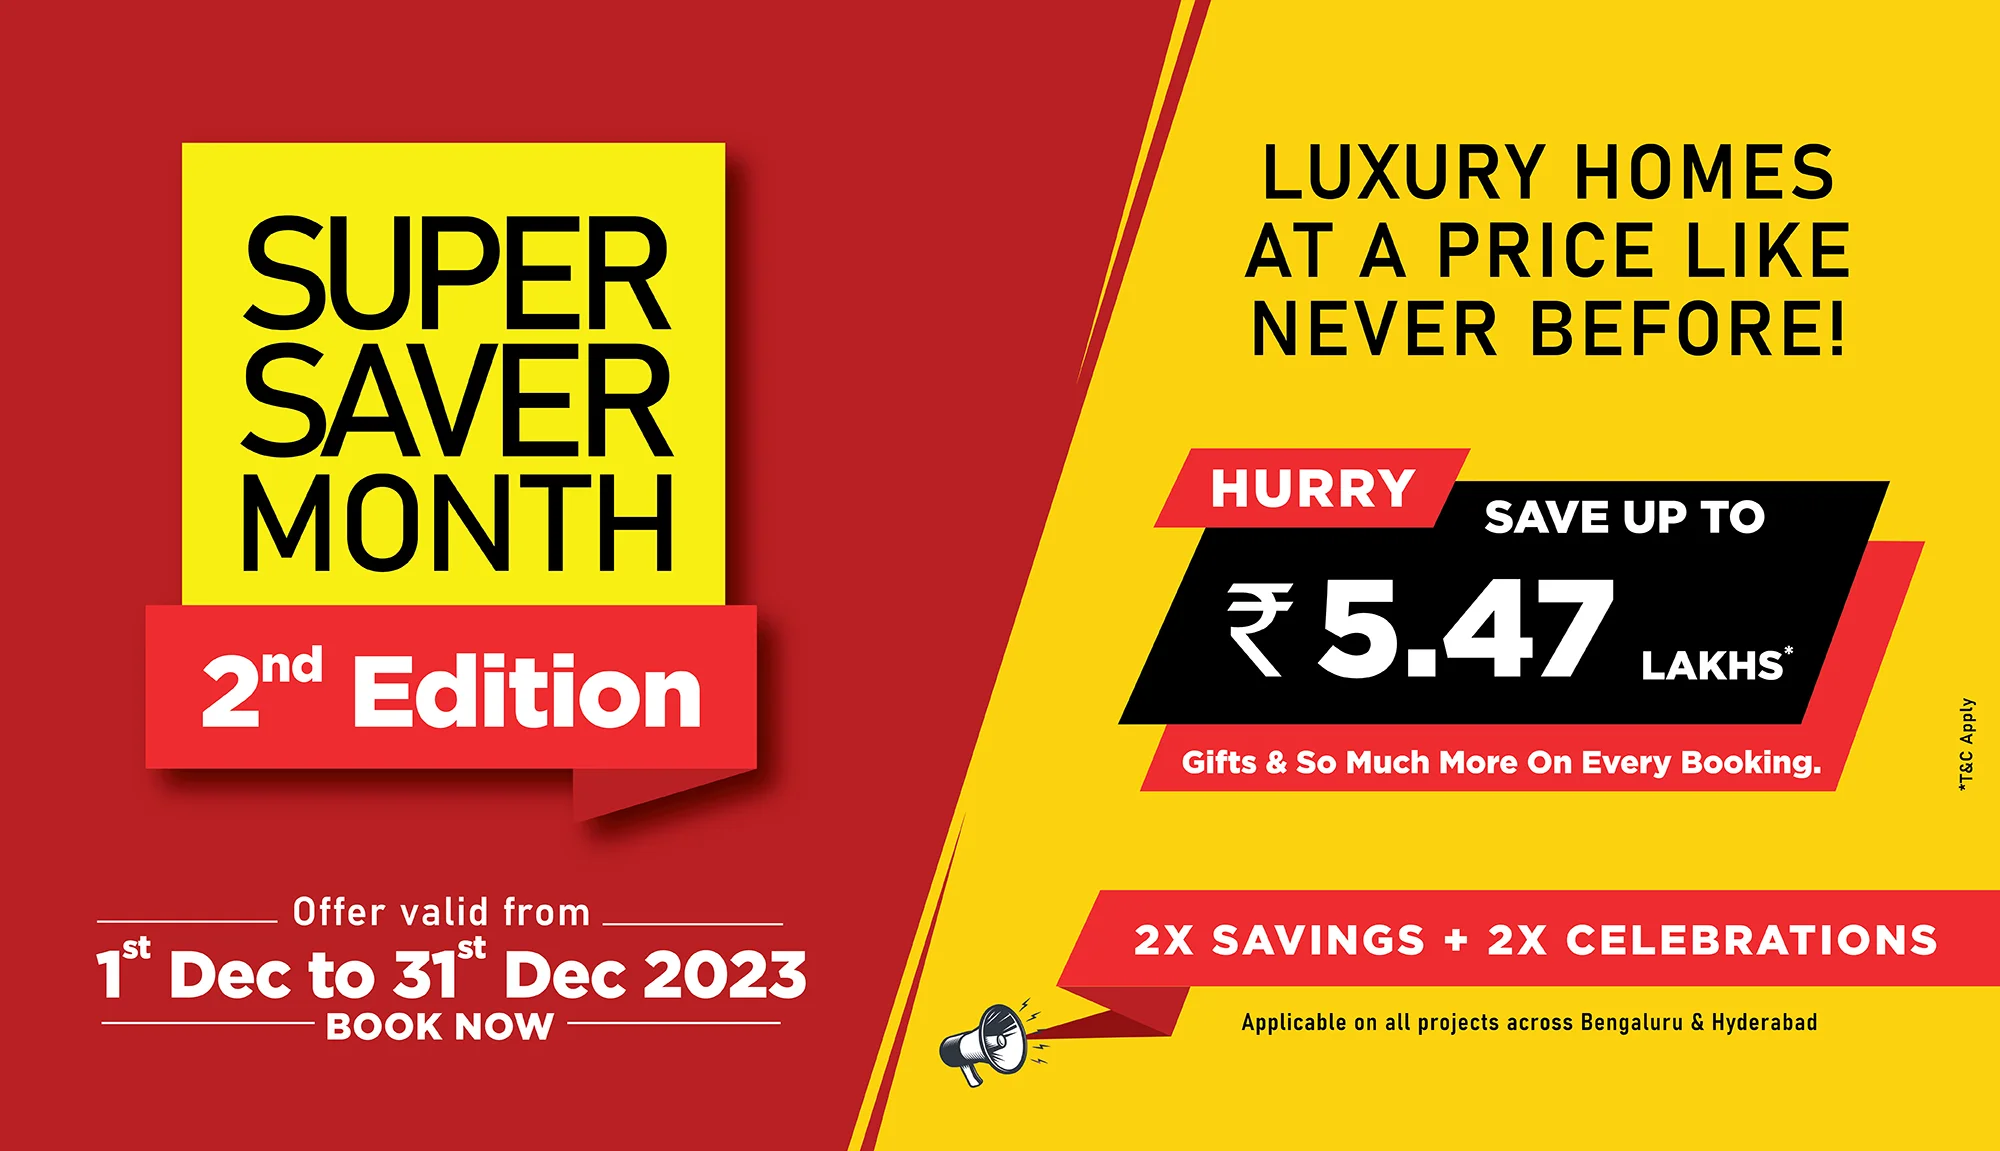 Sumadhura's Super Saver Deals on 2,3 Bhk Apartments in Hyderabad